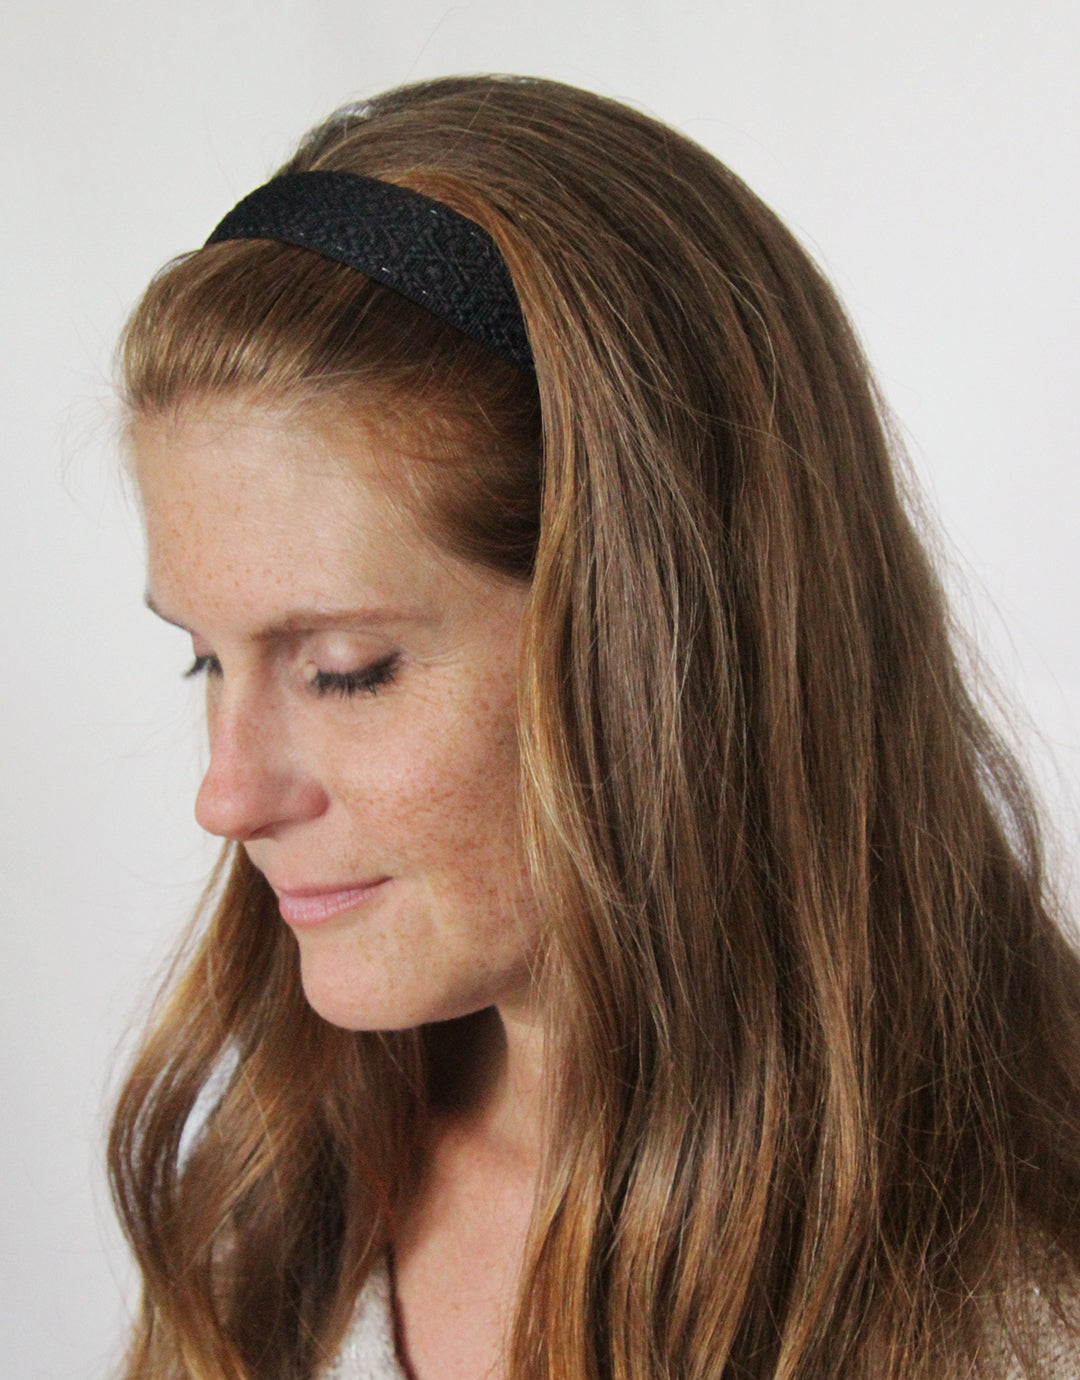 Women's Headbands And Hair Accessories